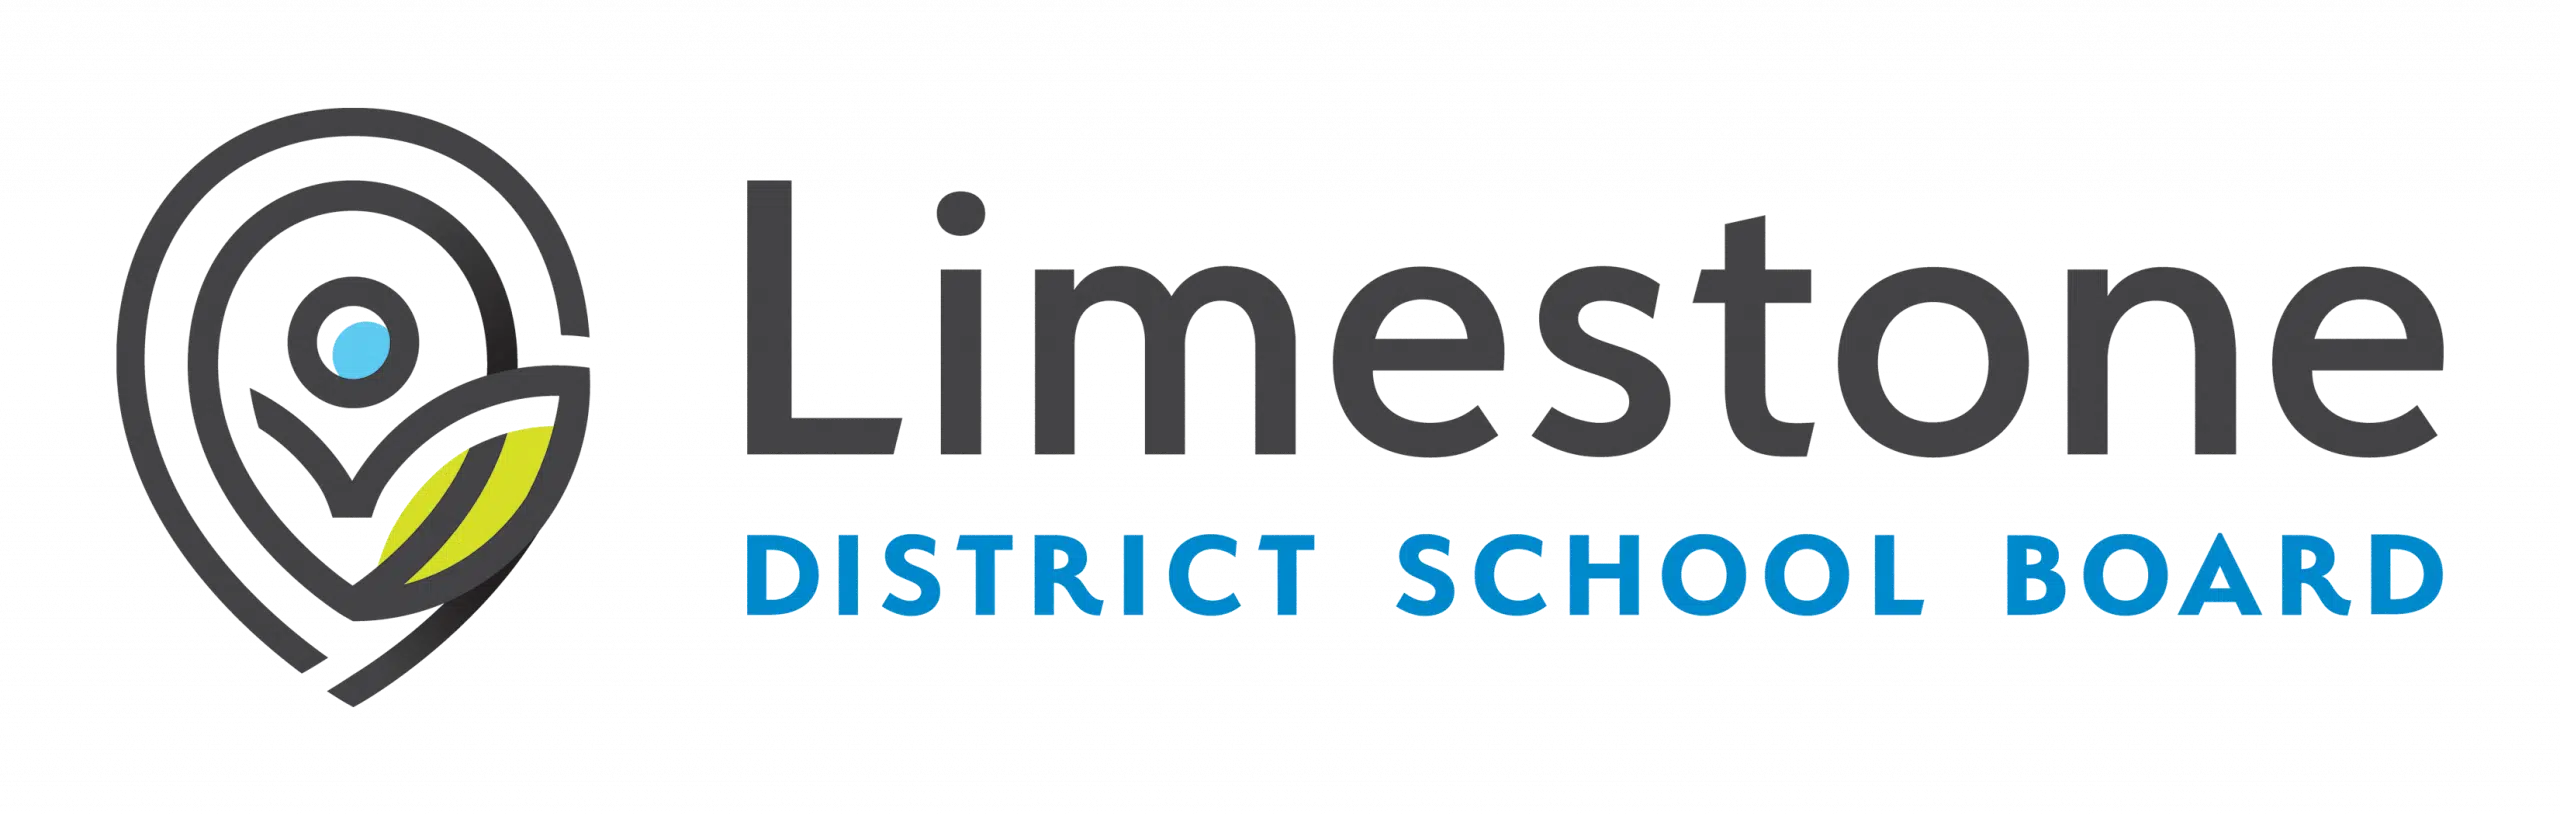 2021/22 school year calendar approved for Limestone District School